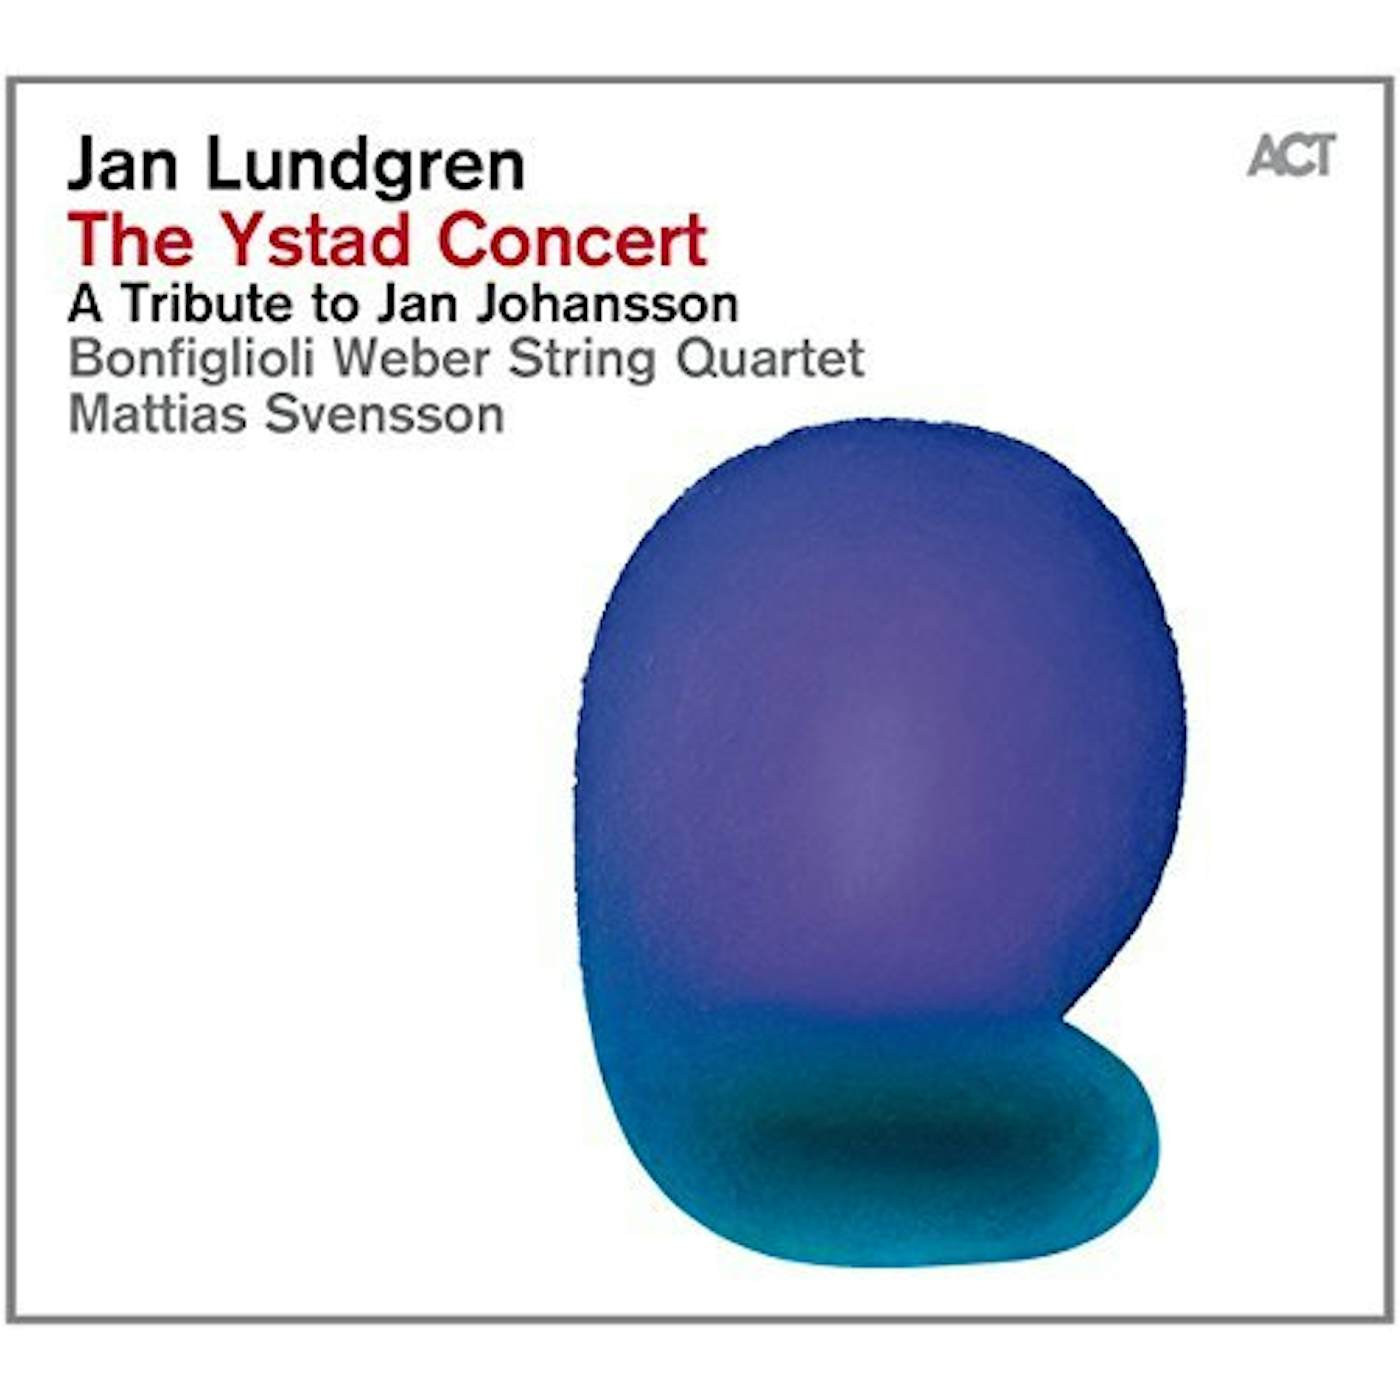 Jan Lundgren YSTAD CONCERT CD